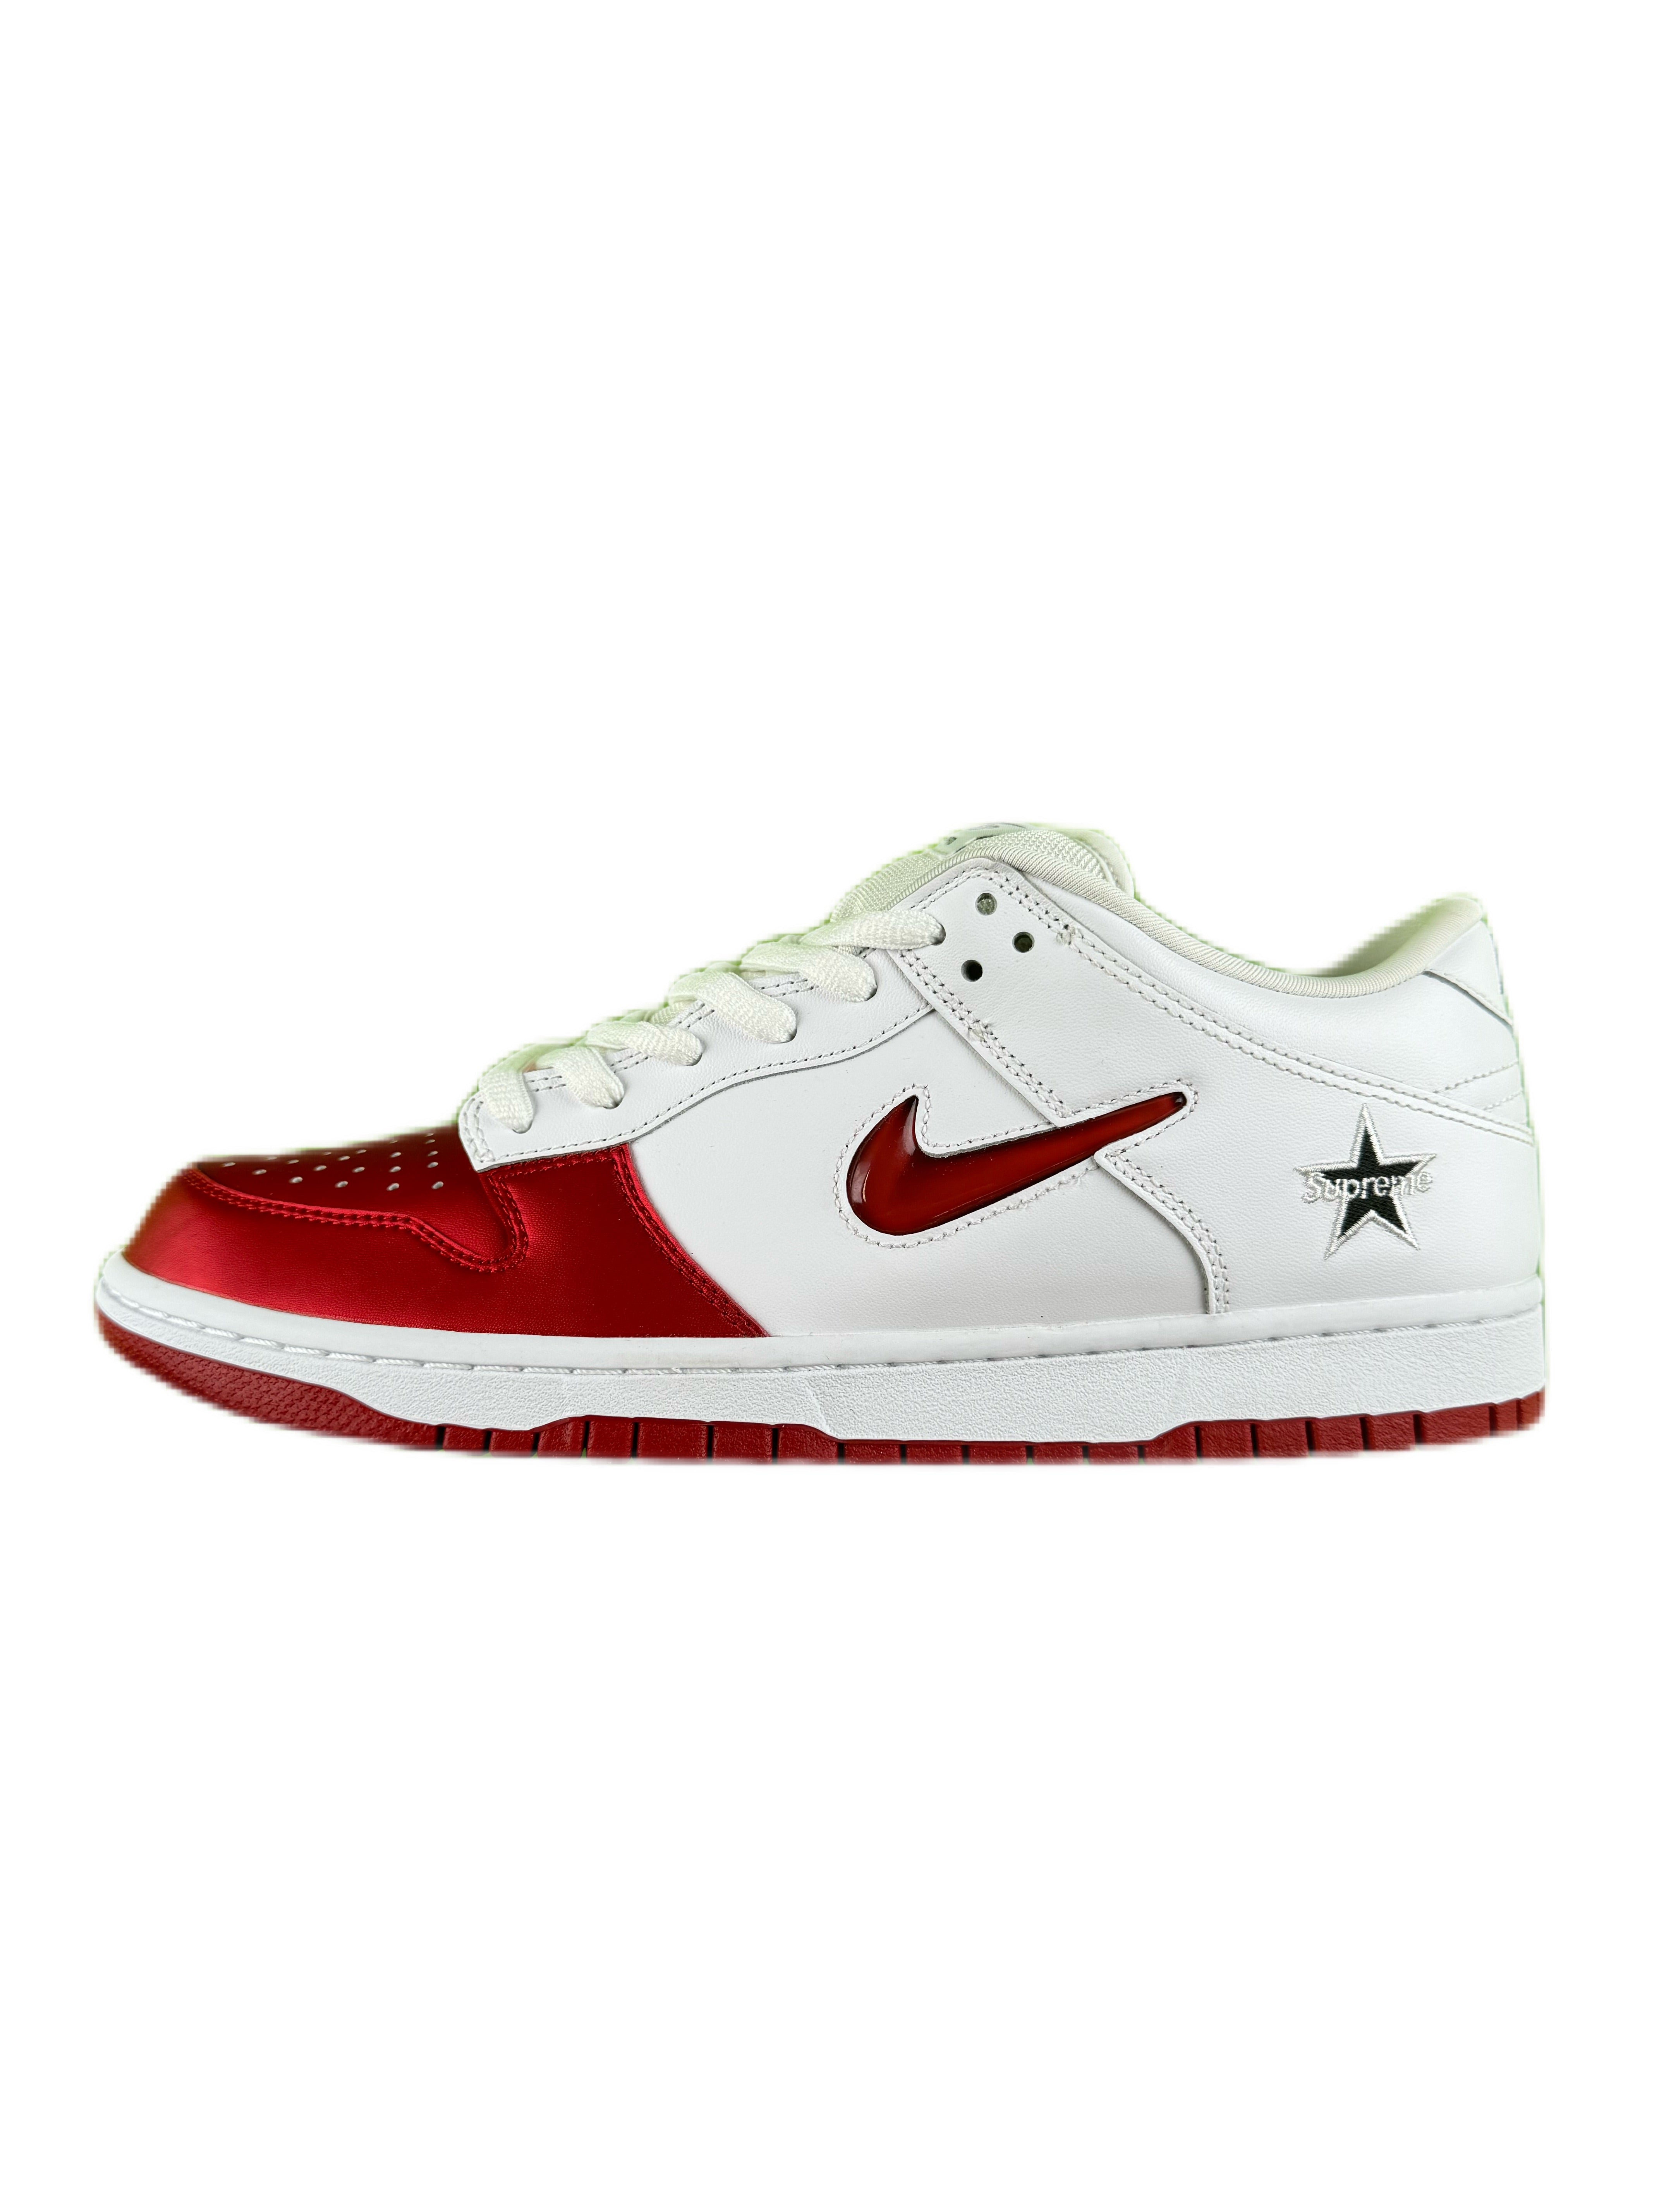 Nike SB x Supreme NYC - Dunk Low varsity red / white US11